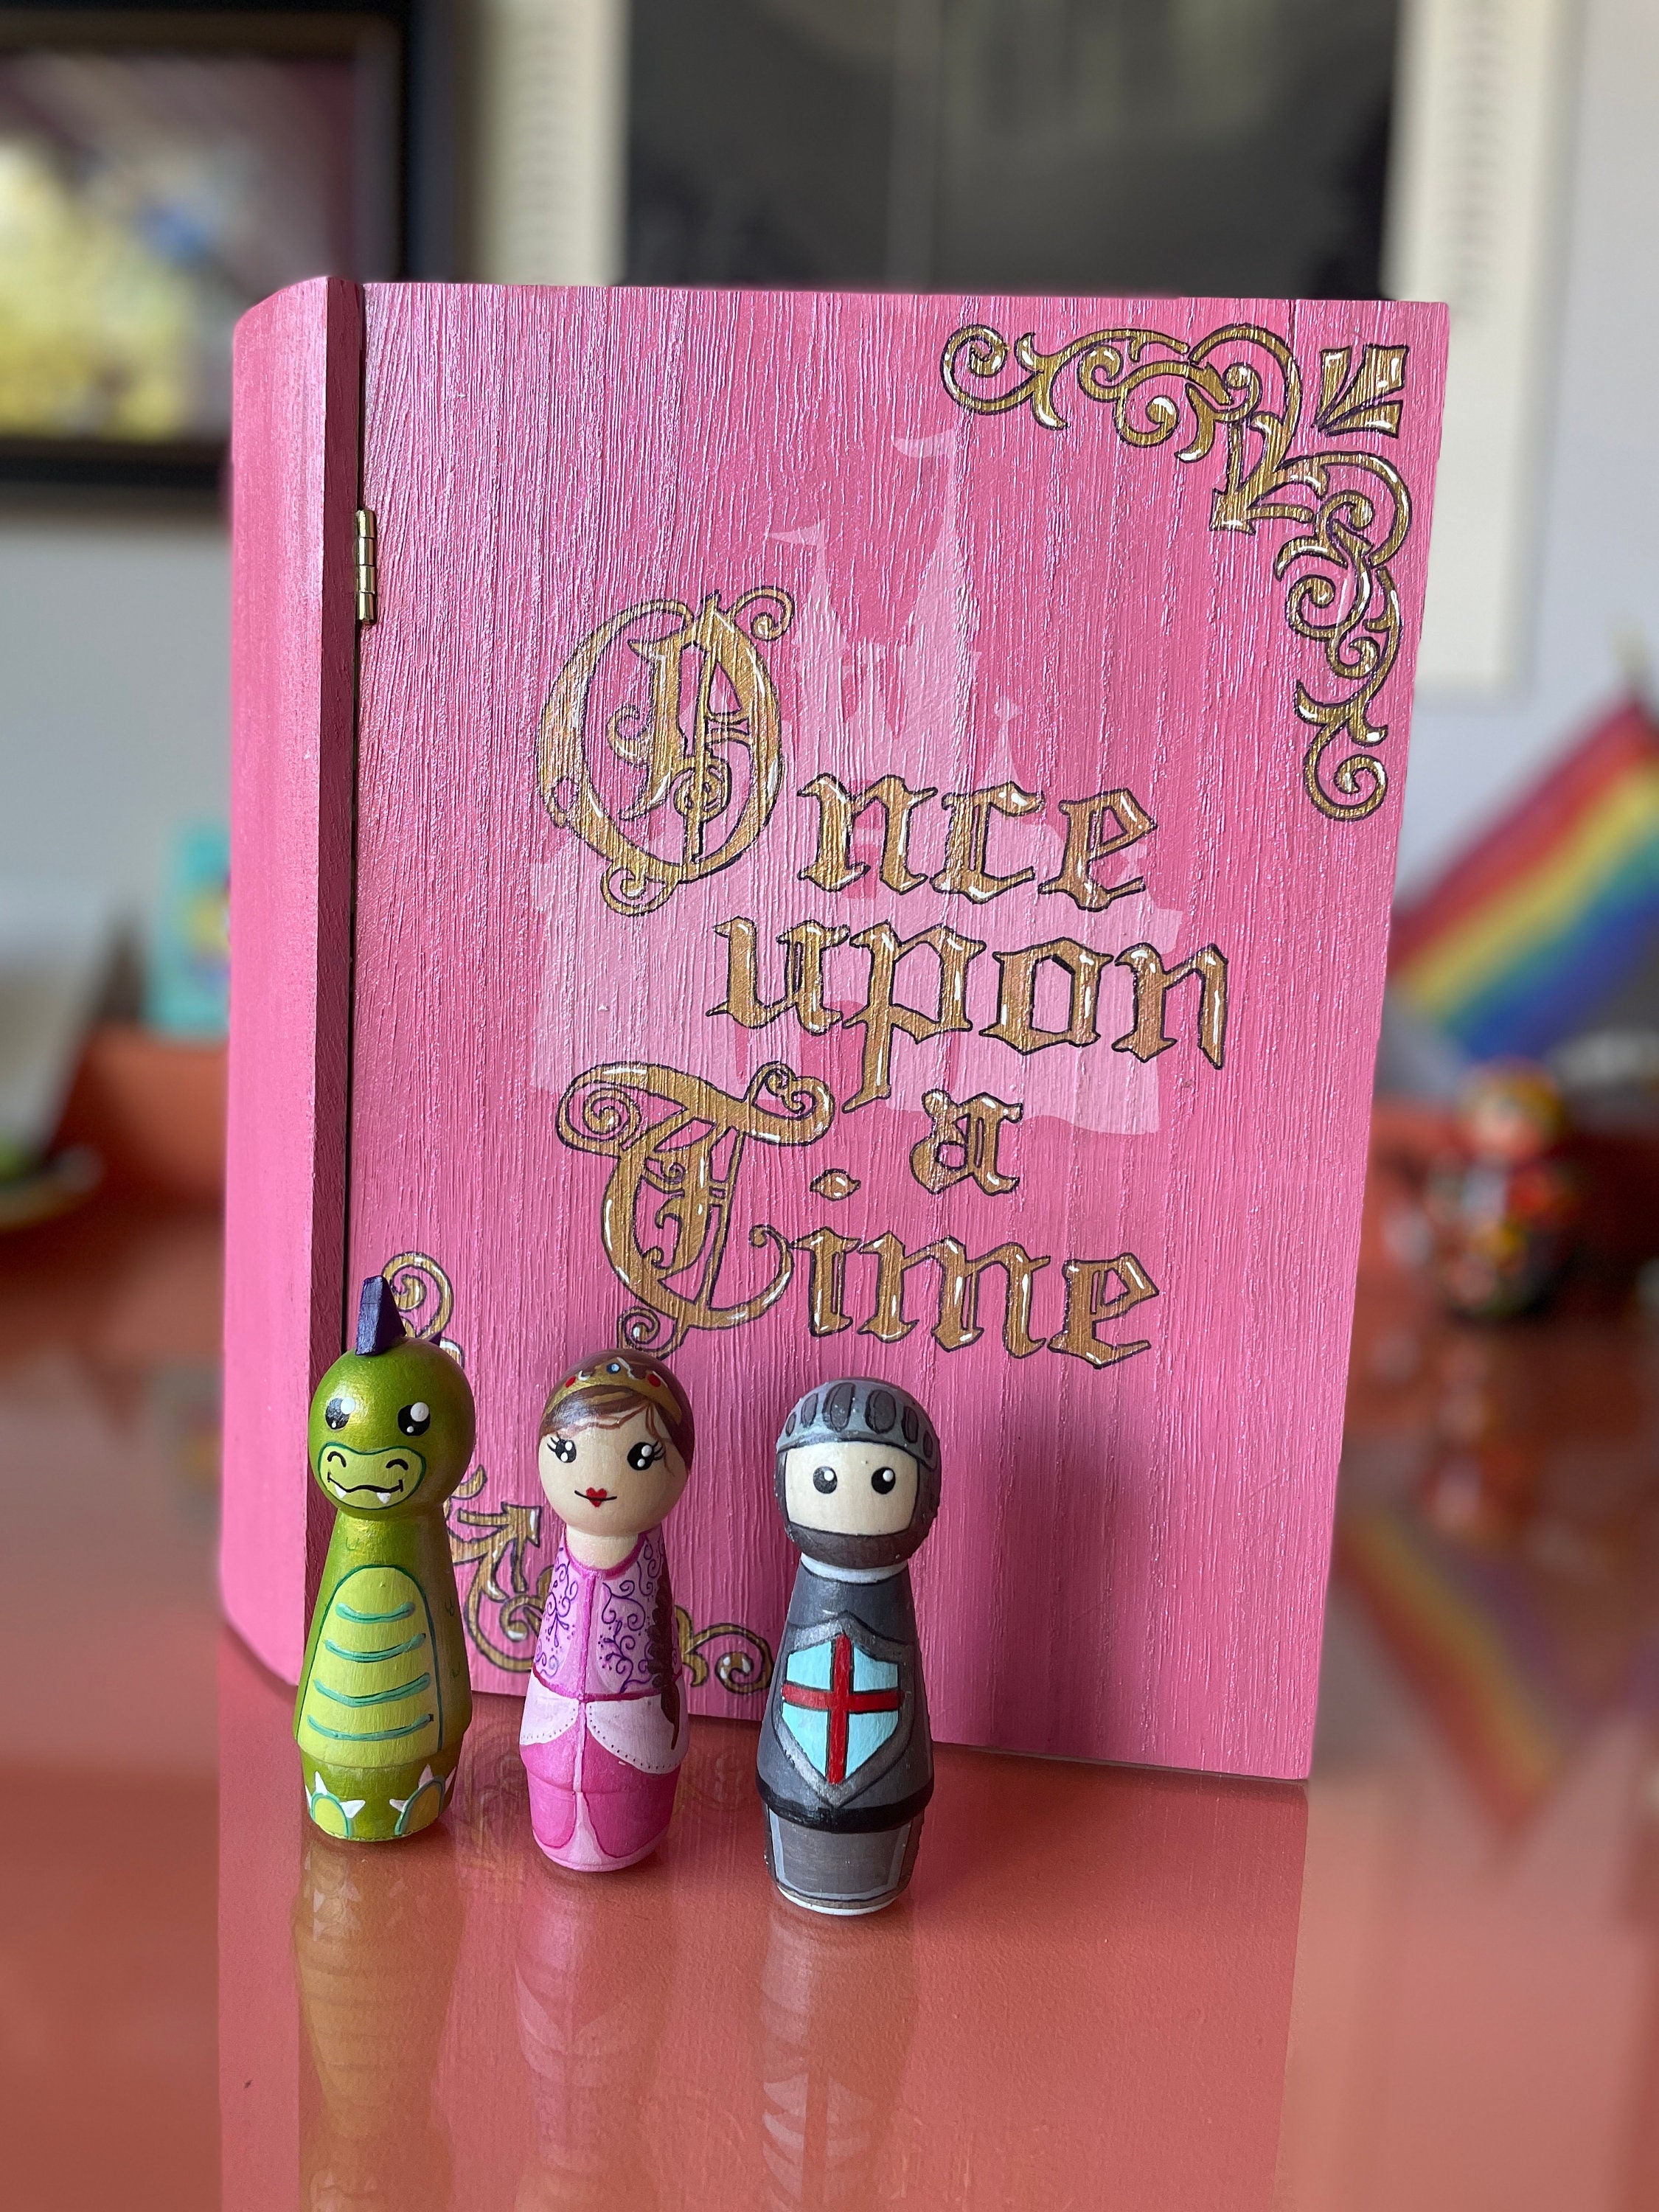 Cinderella Peg Doll Set, Wooden Dolls, Montessori Toys, Creative